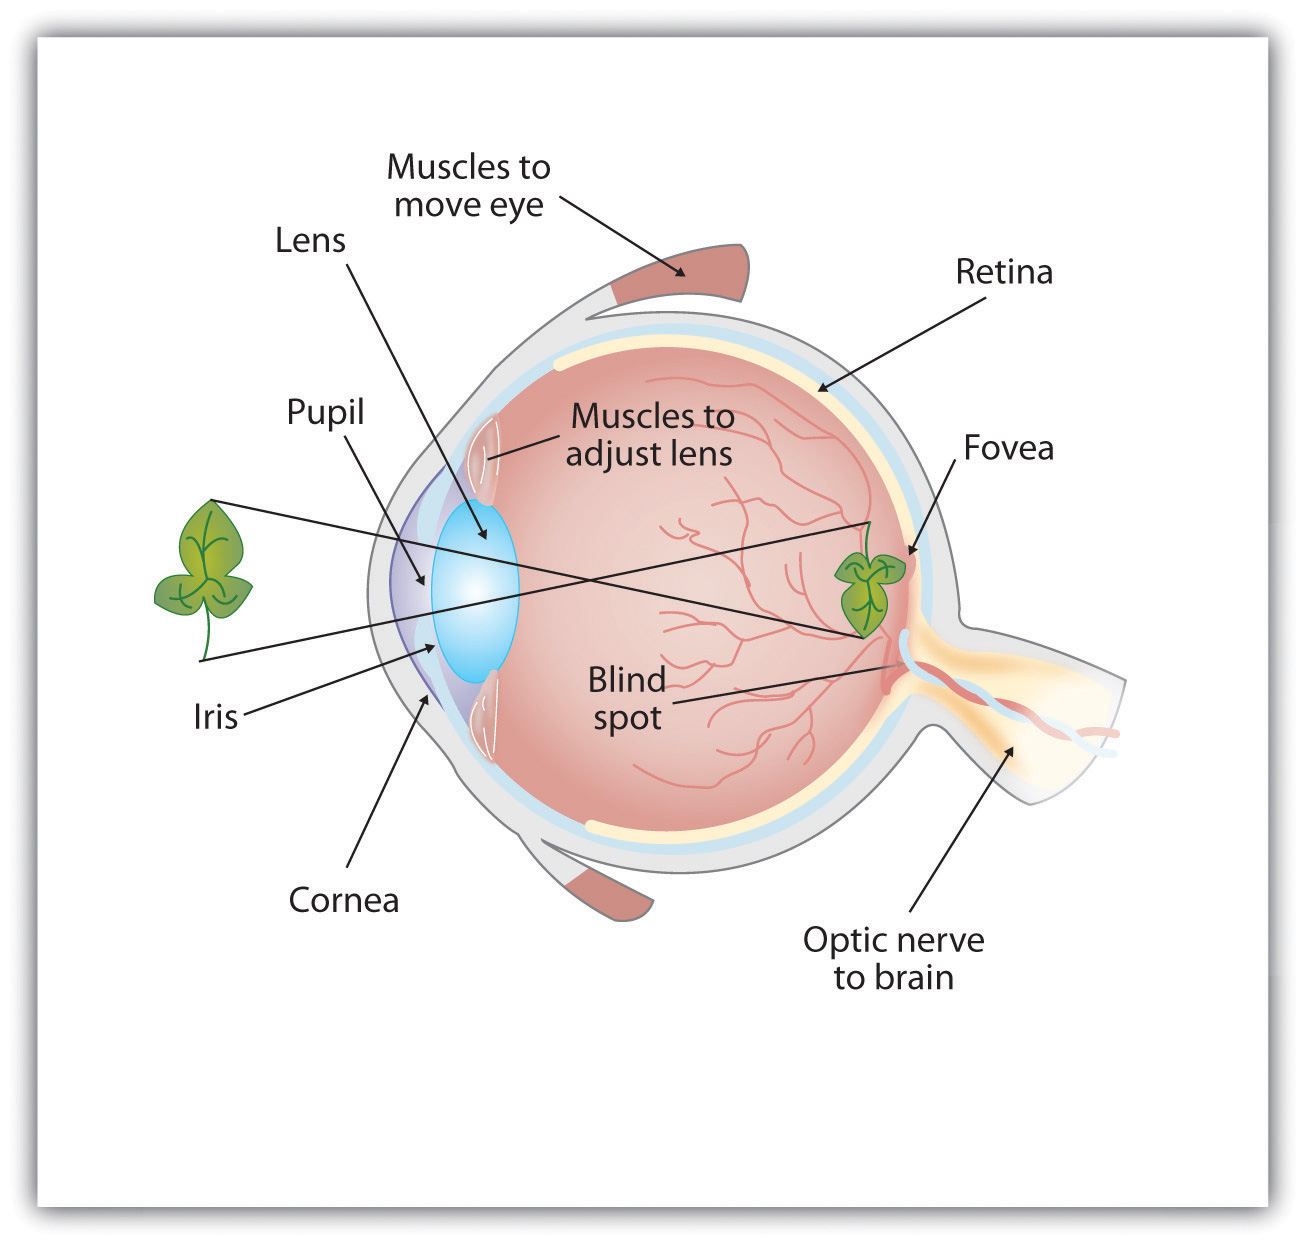 Eye Model from Introduction to Psychology by University of Minnesota